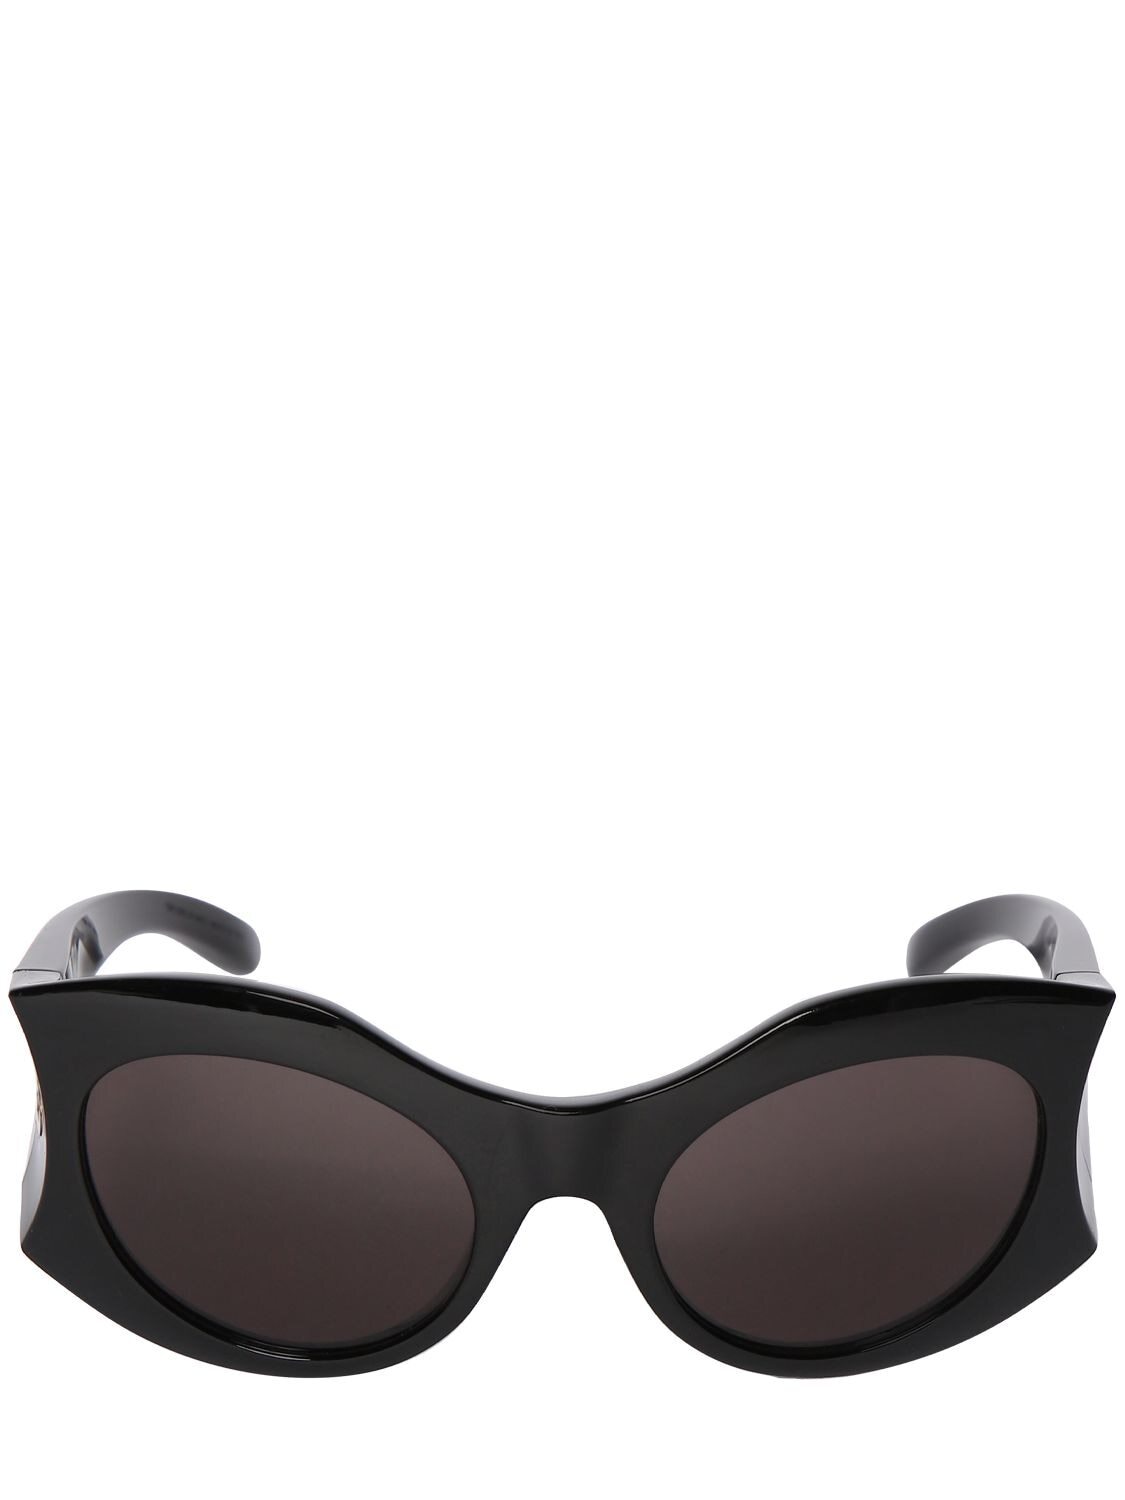 BALENCIAGA 0256s Hourglass Acetate Sunglasses in black